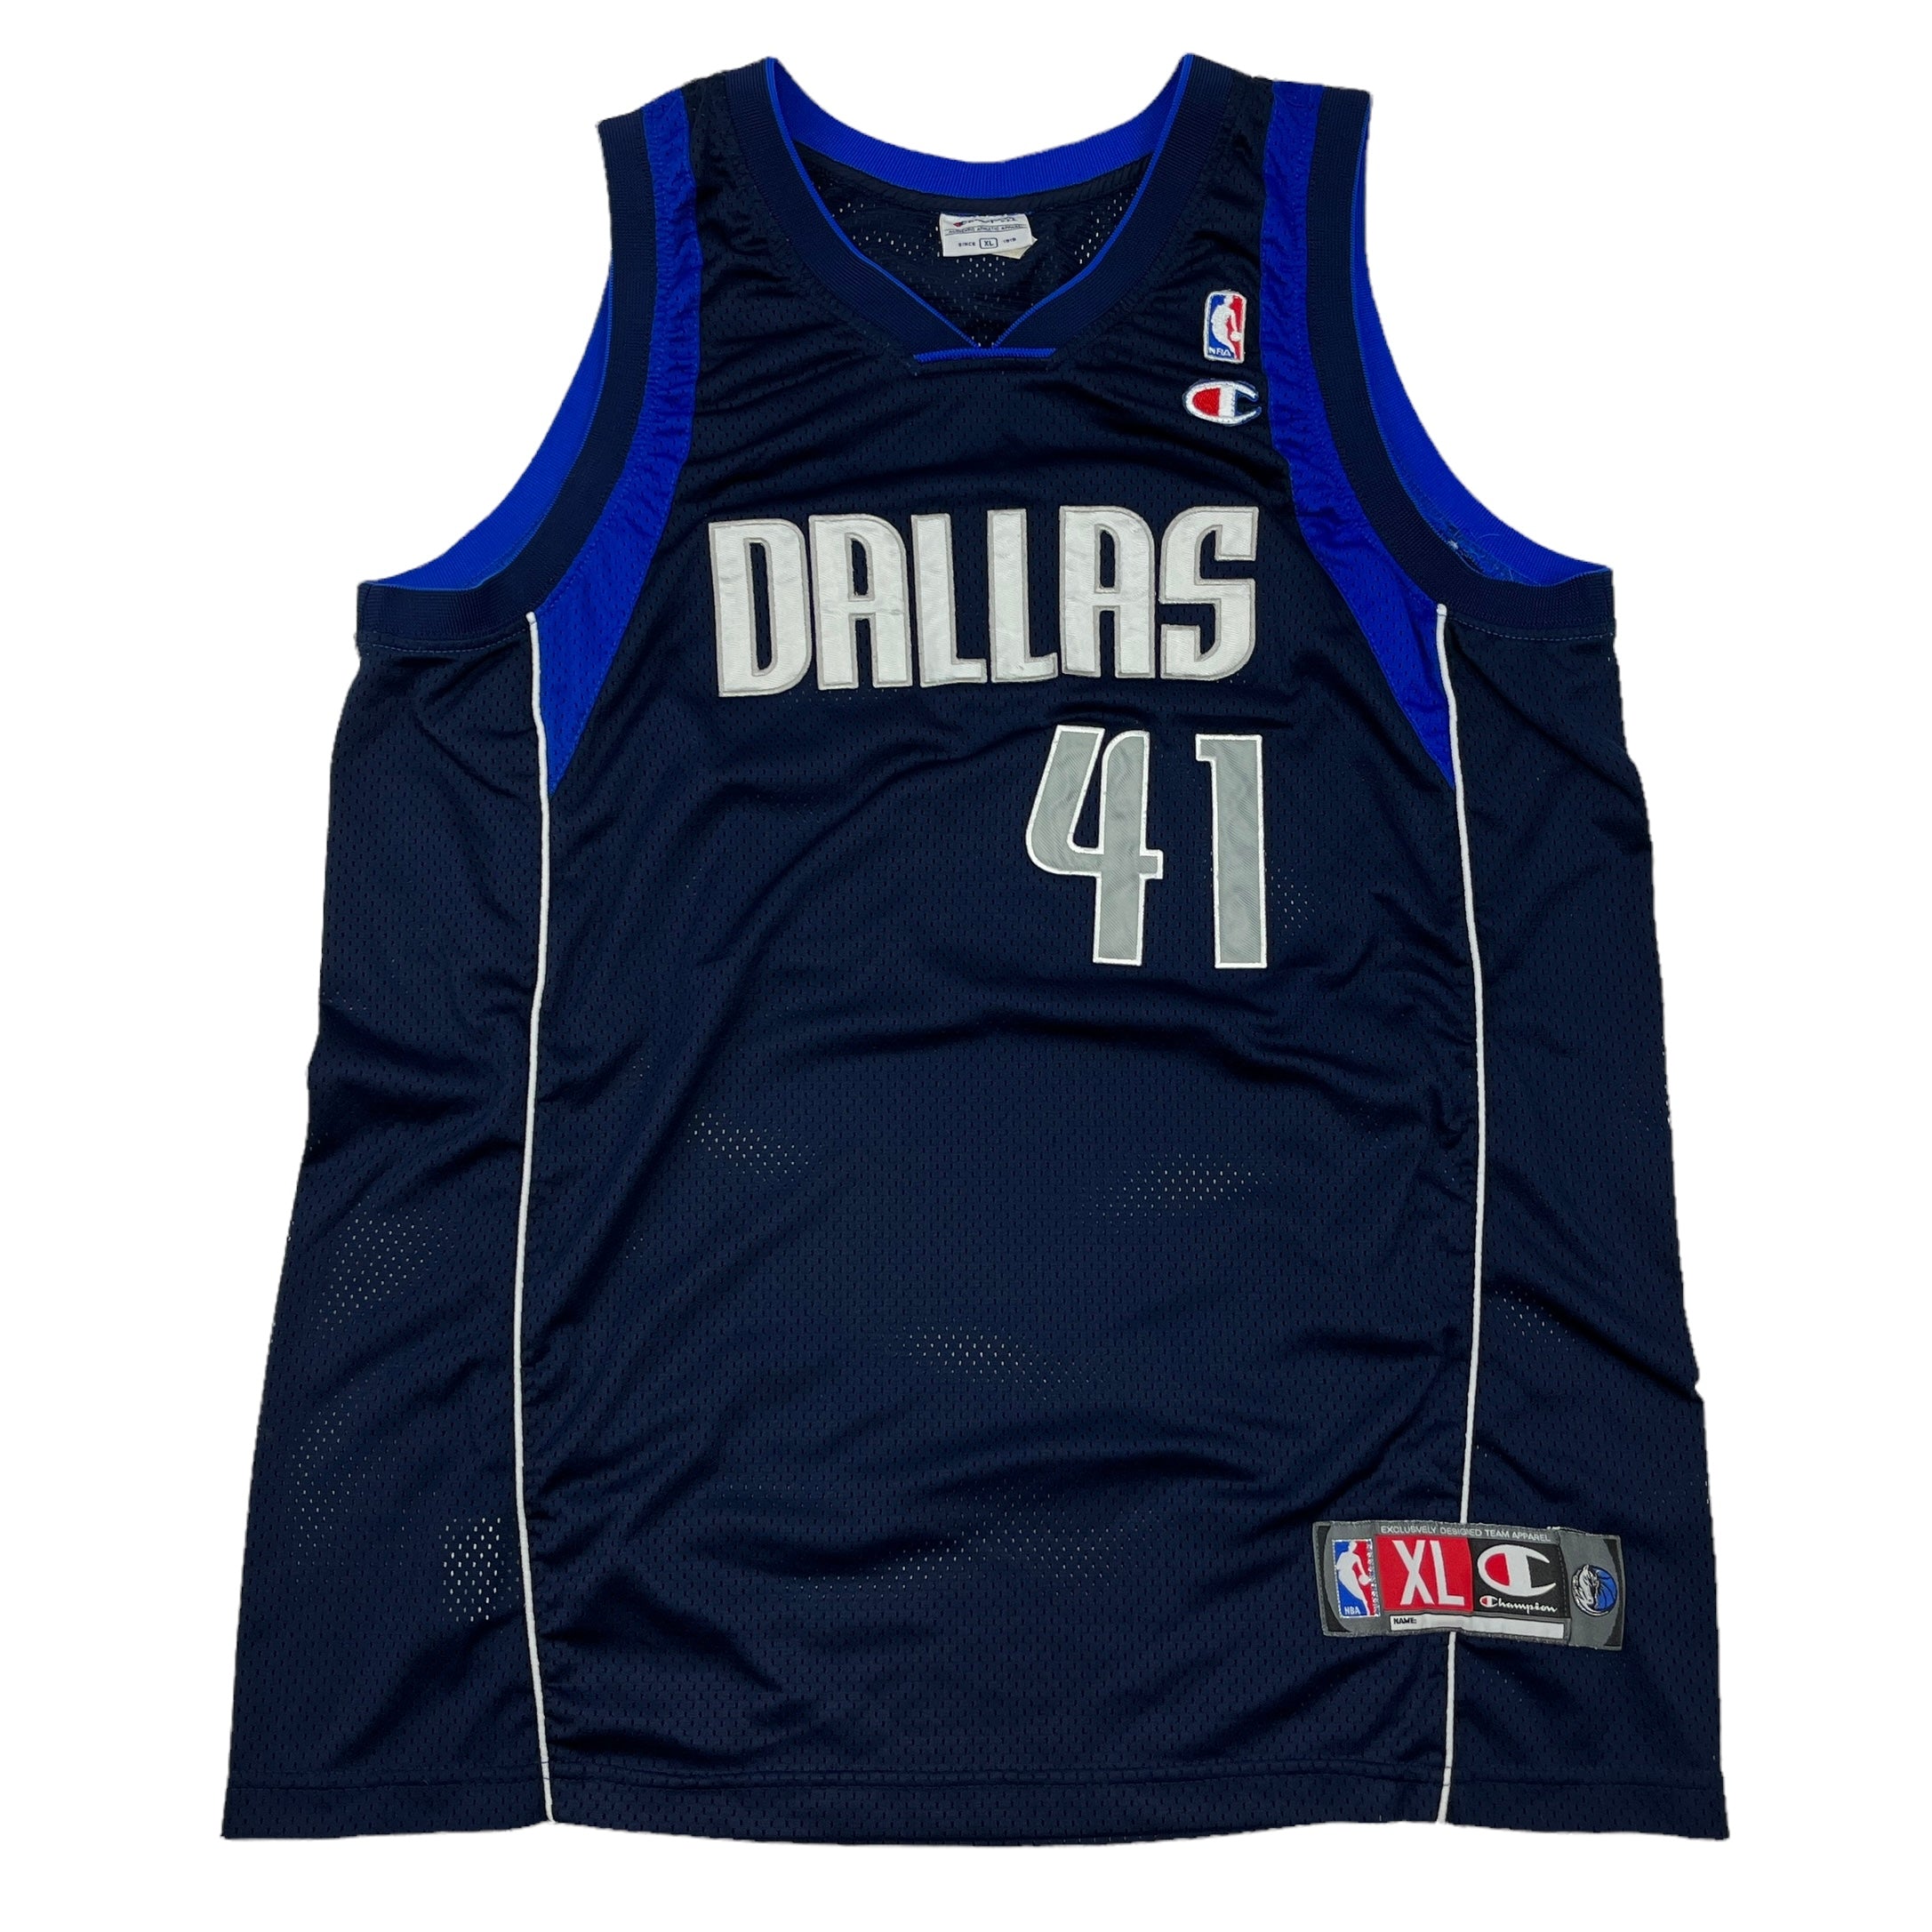 Dirk Nowitzki Dallas Mavericks Jerseys, Dirk Nowitzki Shirts